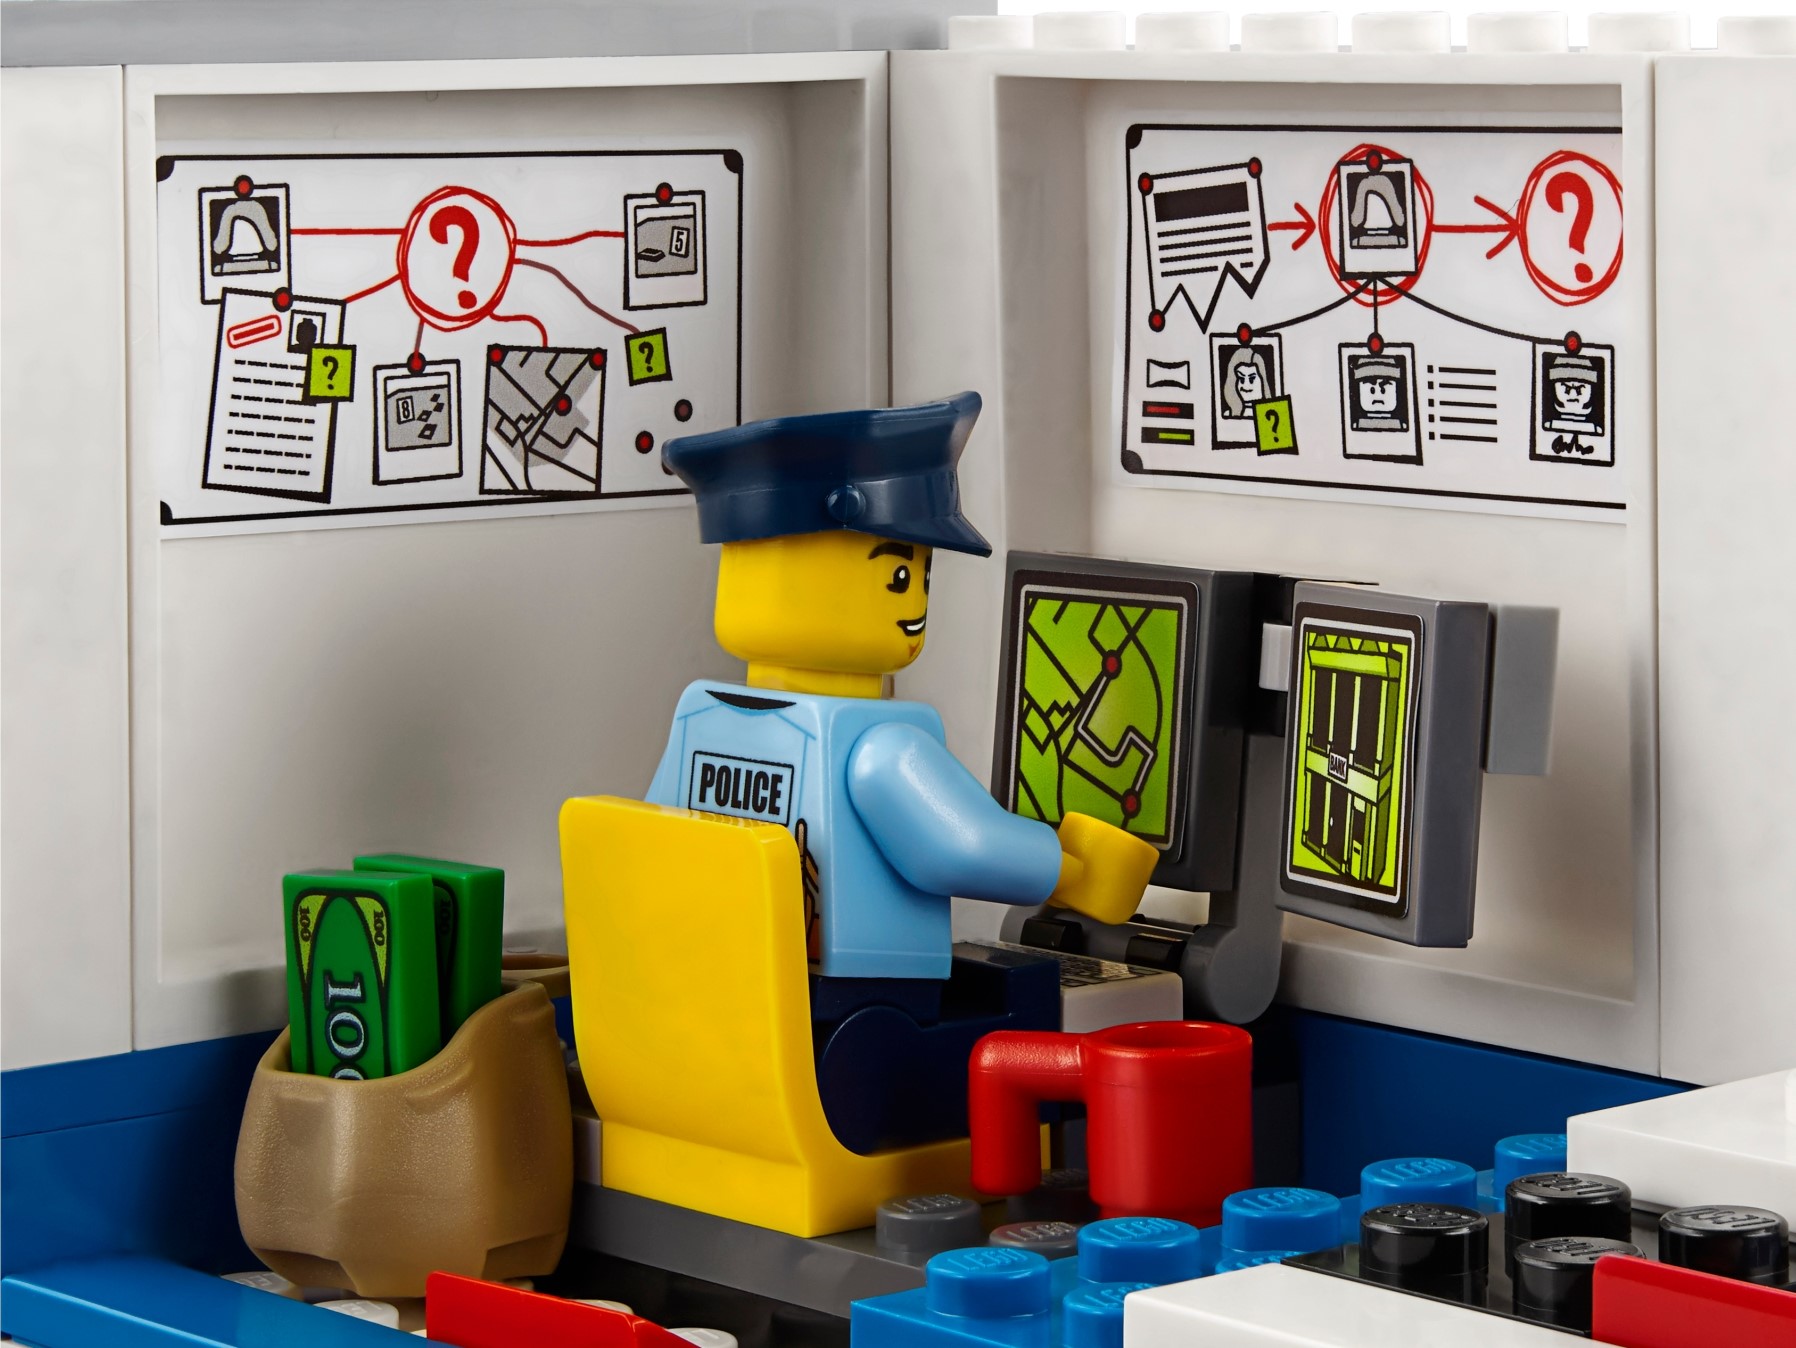 LEGO City 60139 Police Mobile Command Center BRAND NEW